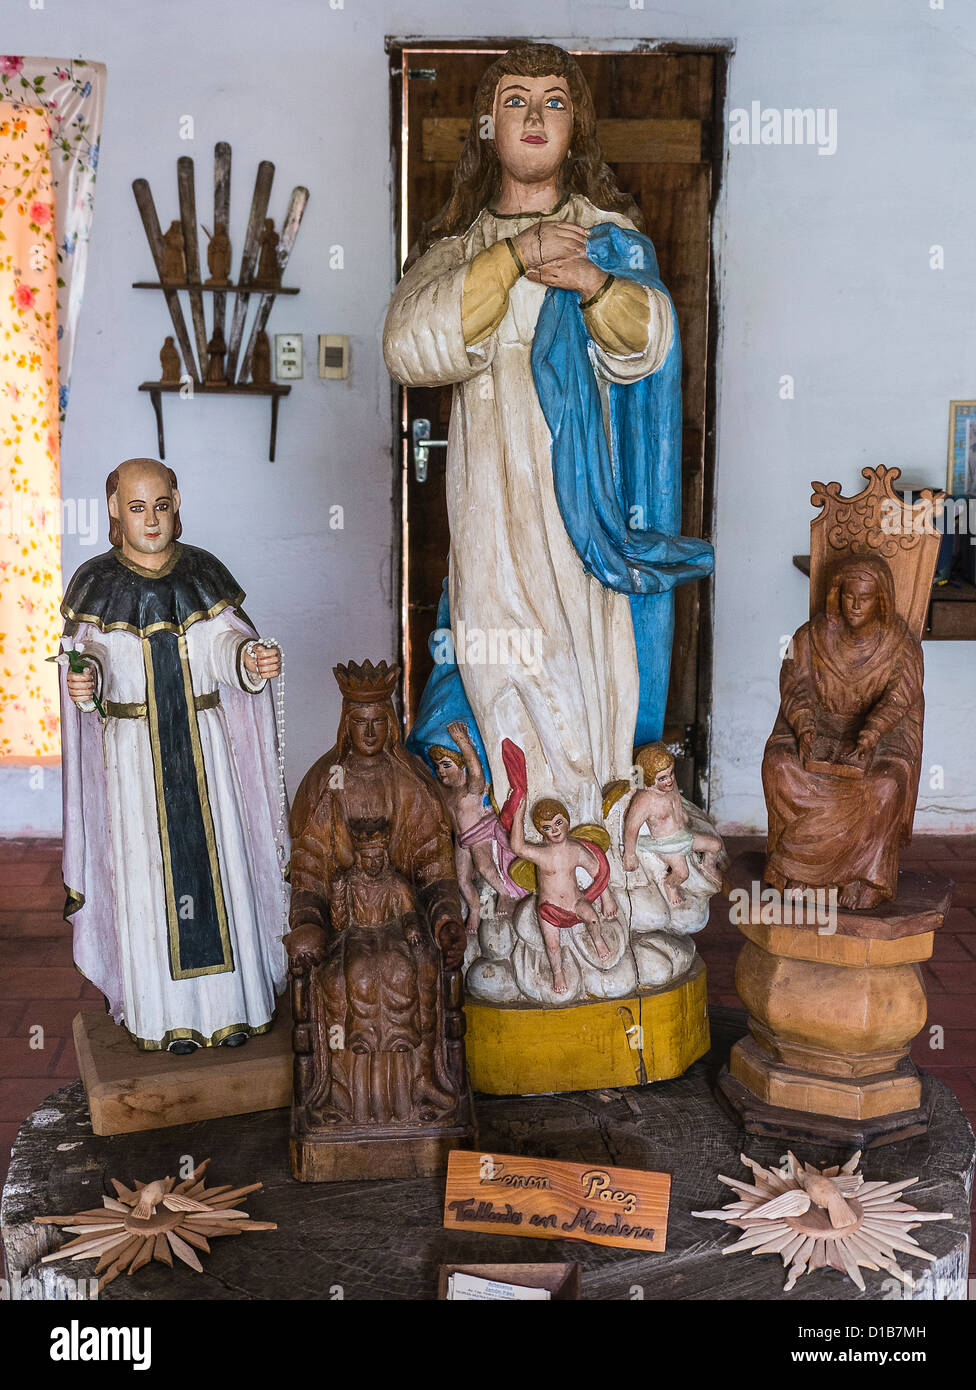 Sculptures of santos by the famous sculptor of santos, Zenón Páez, in his studio in Tobatí, Paraguay. Stock Photo